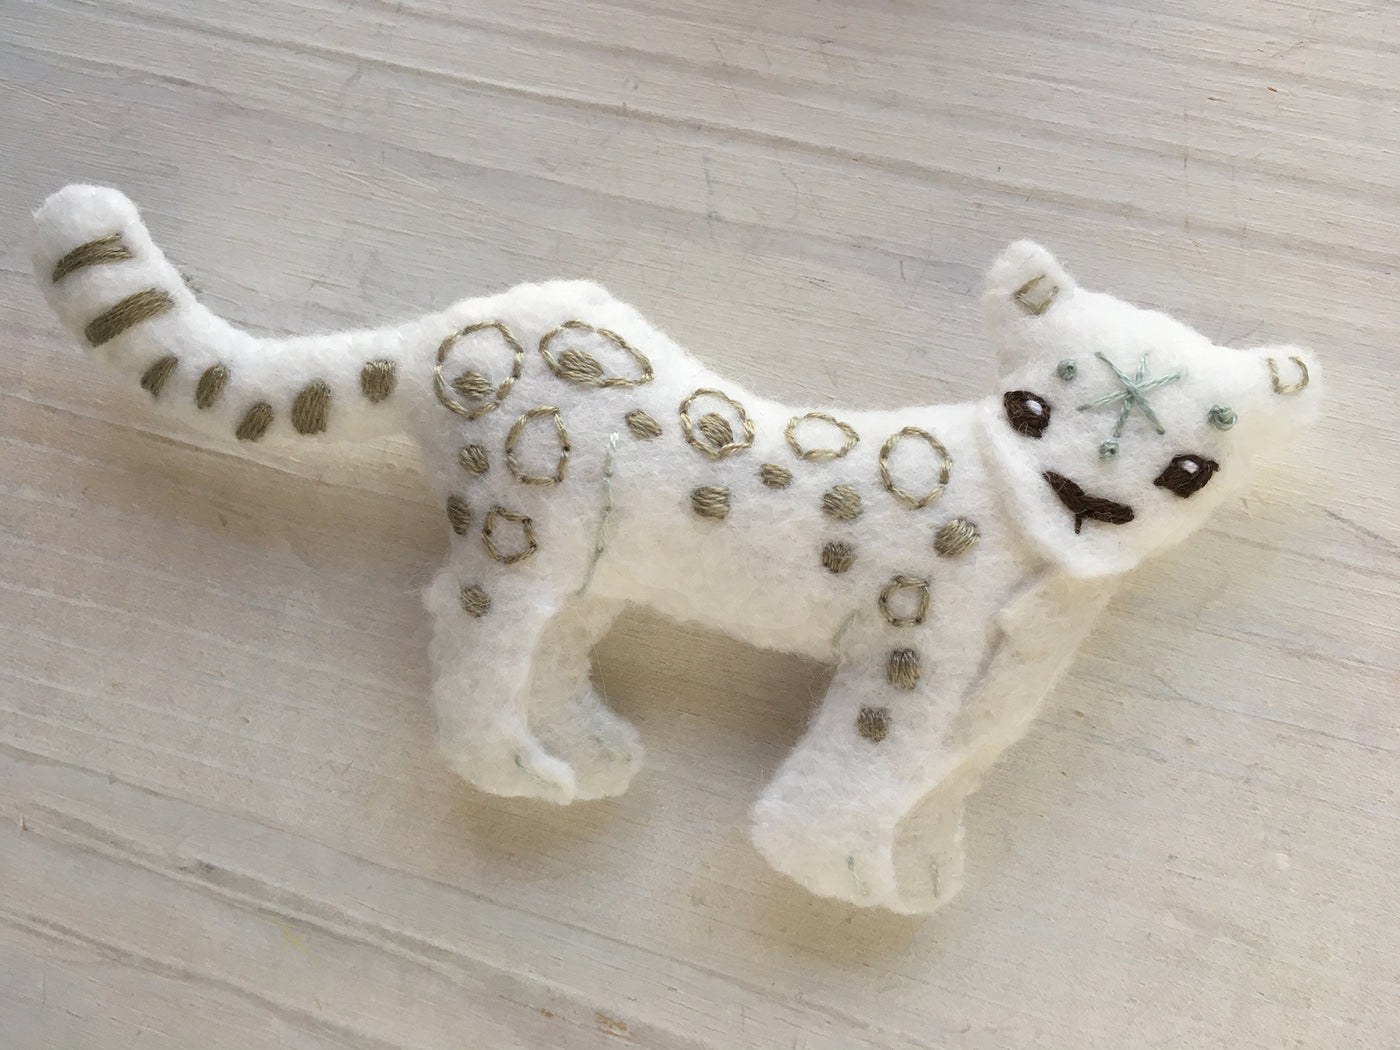 set of 6 Winter Animals plush felt Sewing patterns, Christmas ornaments